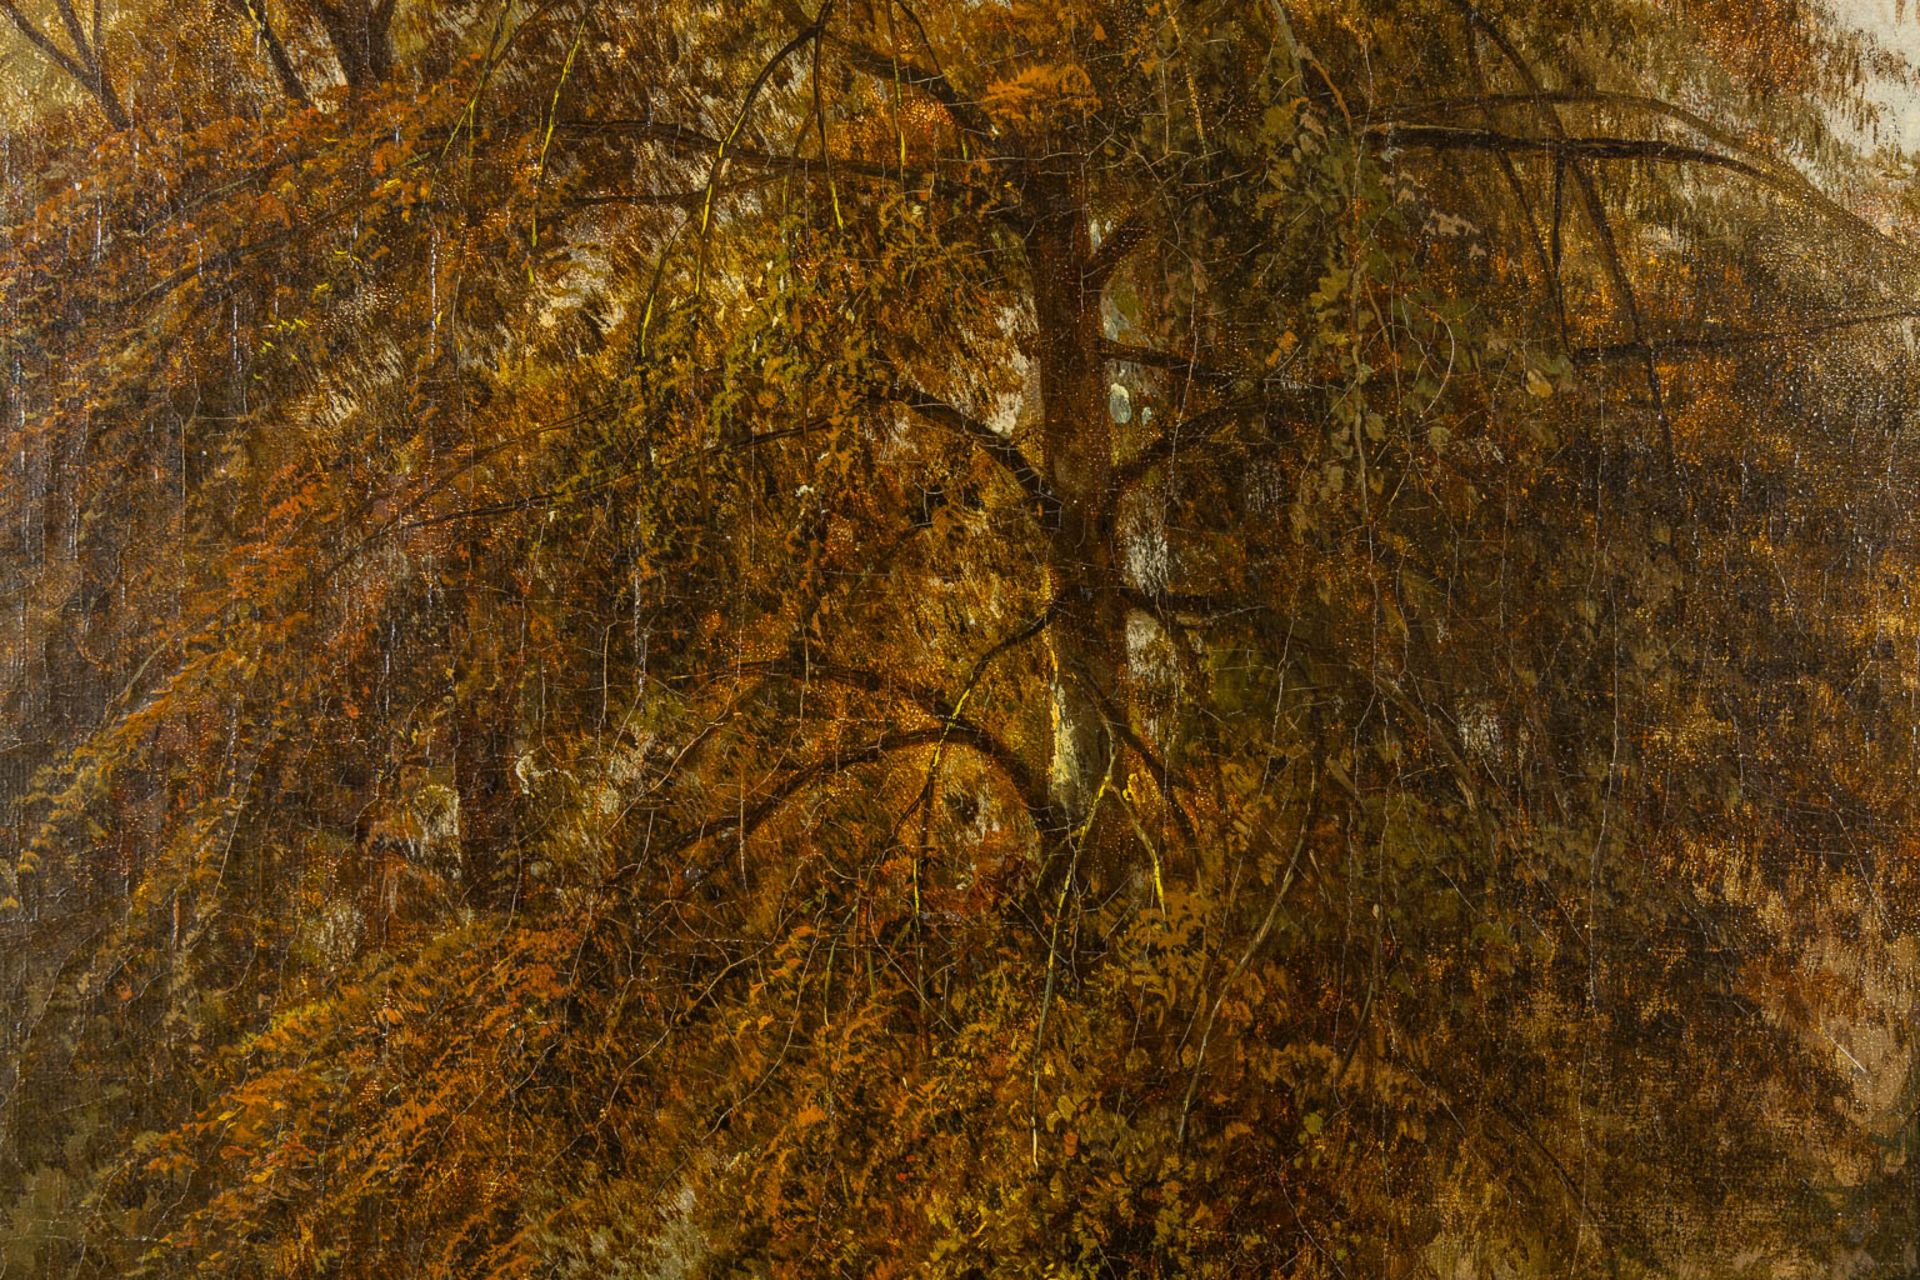 Hendrik VERHEGGEN (1809-1883) 'Sheep in a forest' Barbizon School, oil on canvas. (W:46 x H:58 cm) - Image 5 of 8